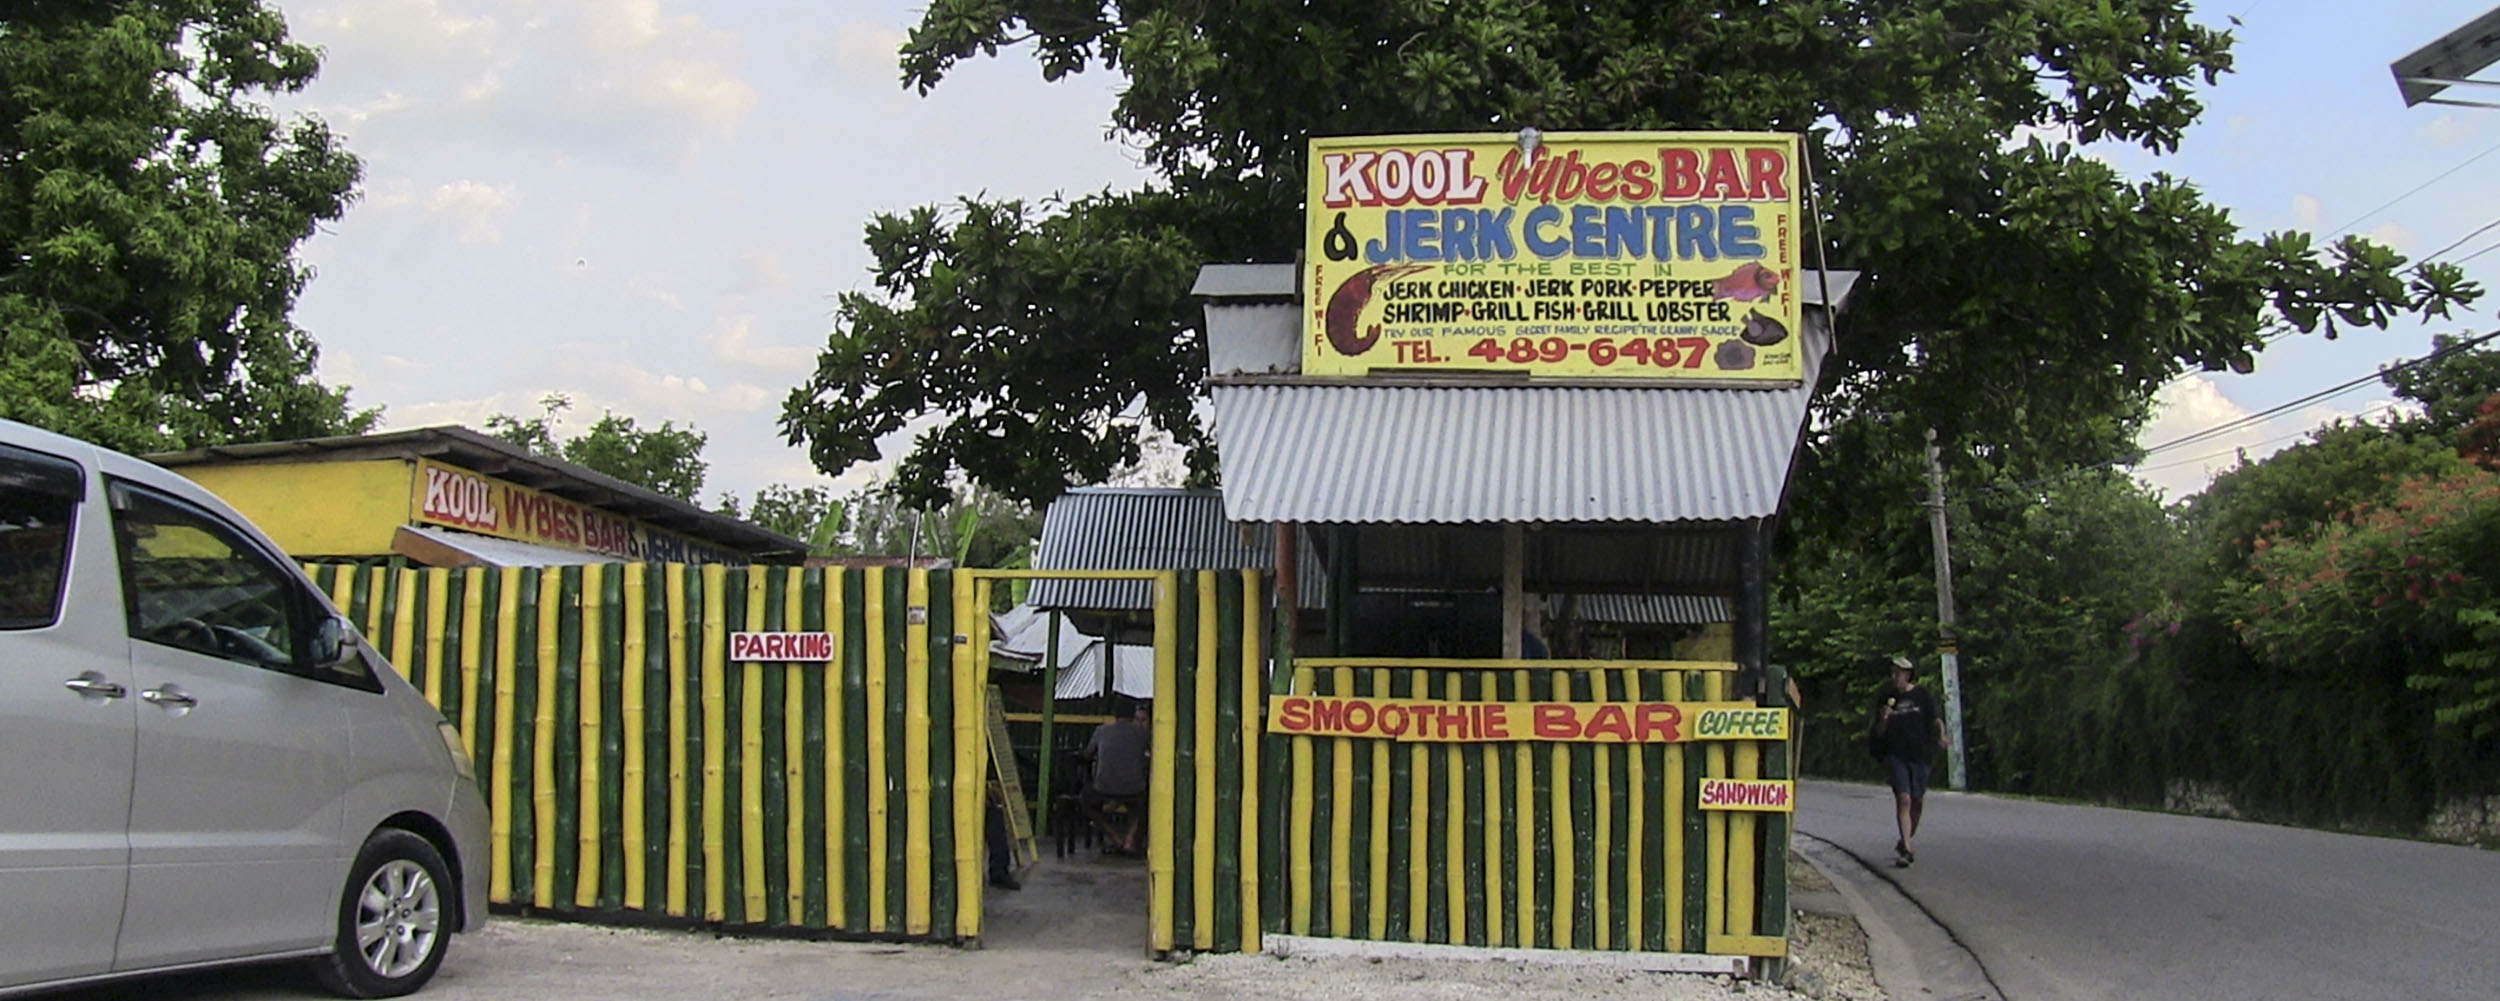 Kool Vybes Bar & Jerk Centre, West End, Negril Jamaica